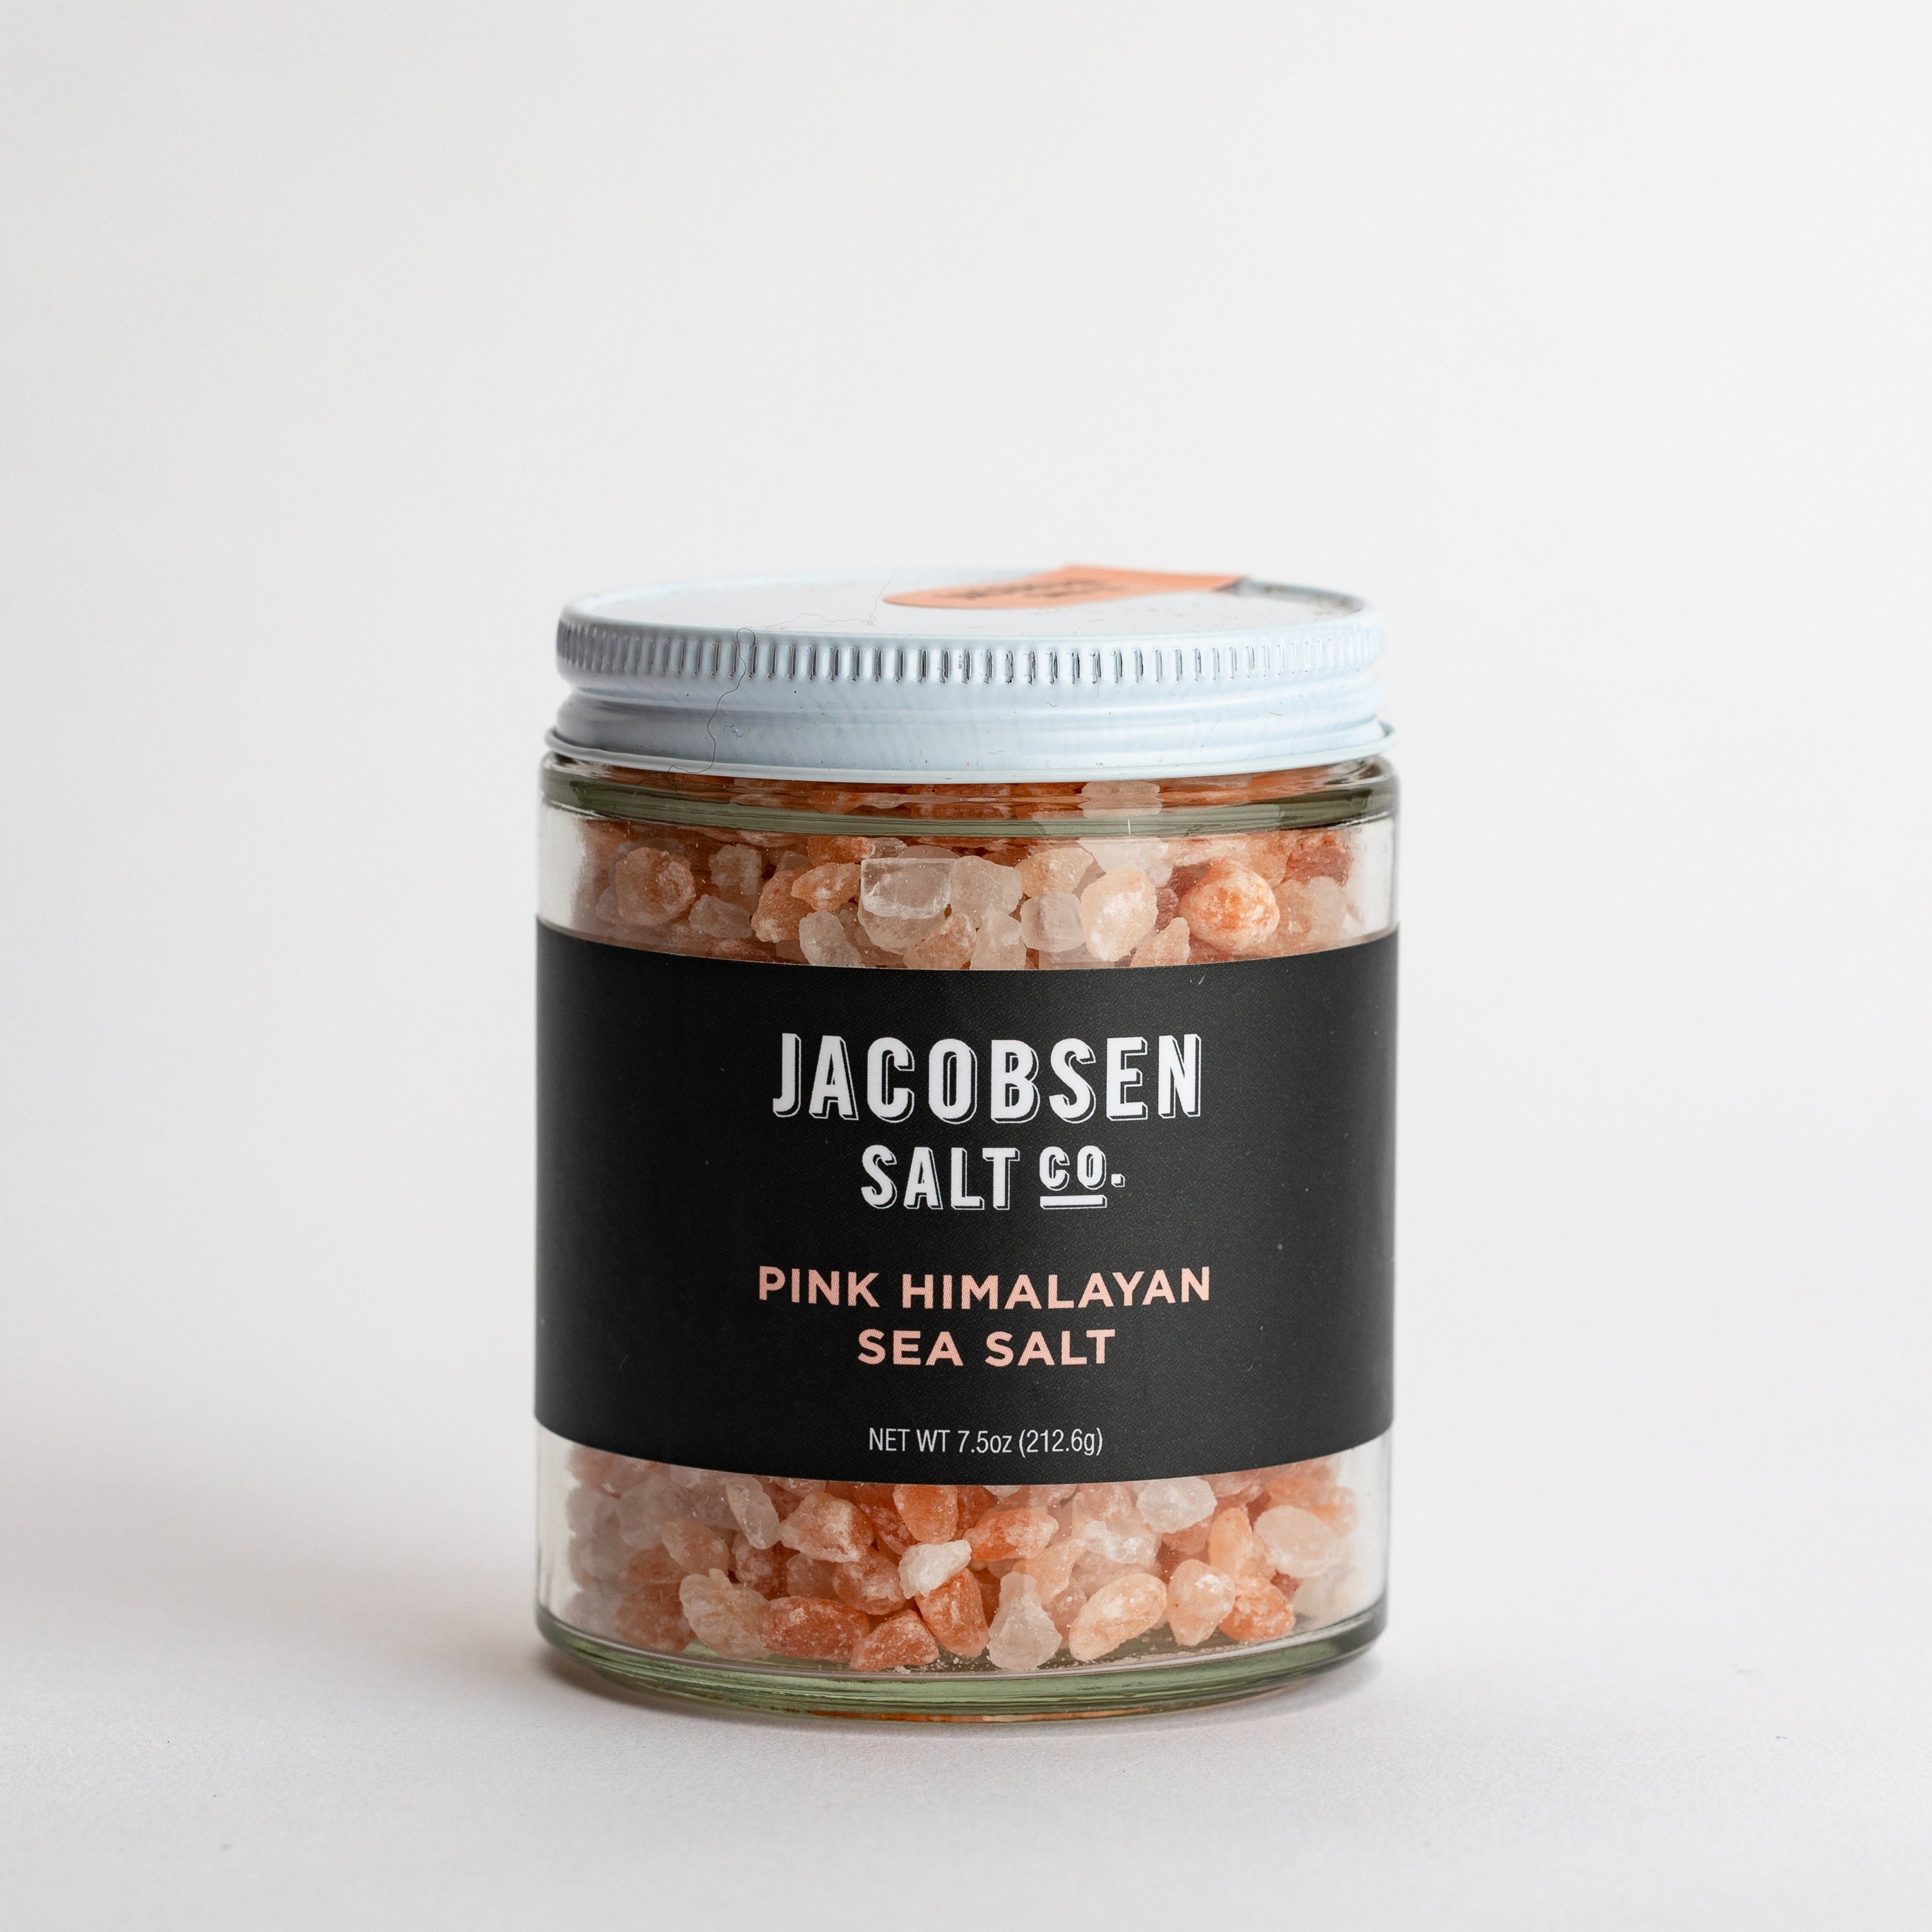 Glass jar filled with pink salt rocks, with a navy blue label.